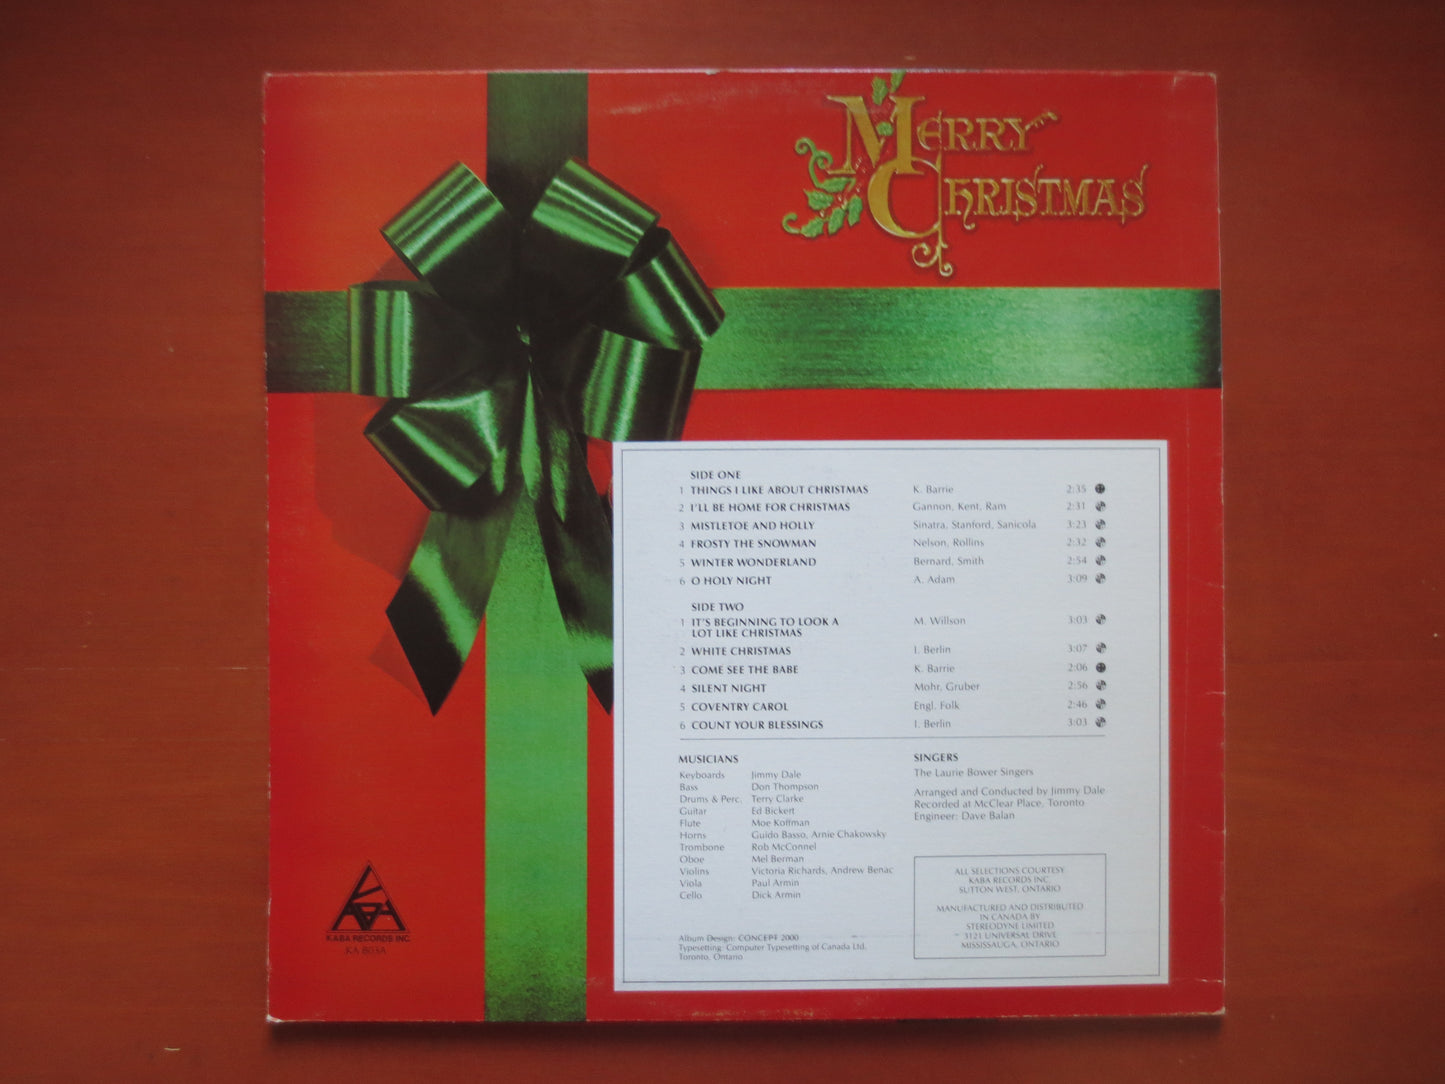 KEATH BARRIE, Merry CHRISTMAS, Keath Barrie Album, Keath Barrie Vinyl, Keath Barrie Lp, Keath Barrie Record, 1980 Record